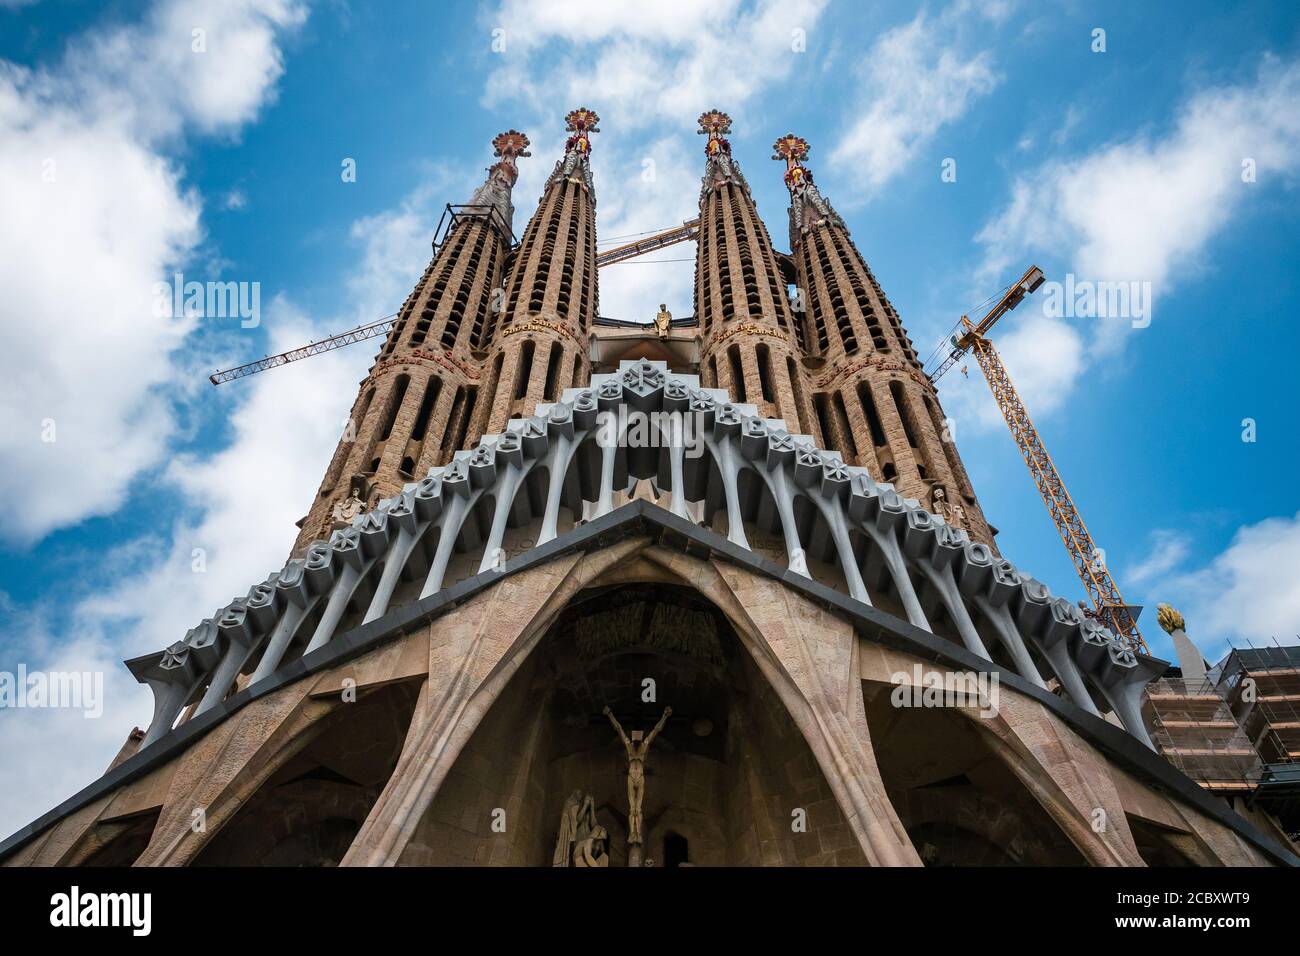 Barcelona, Spain - August 21, 2017: Architectural landmark Sagrada Familia Cathedral, a large Roman Catholic church designed by Antoni Gaudi in Barcel Stock Photo